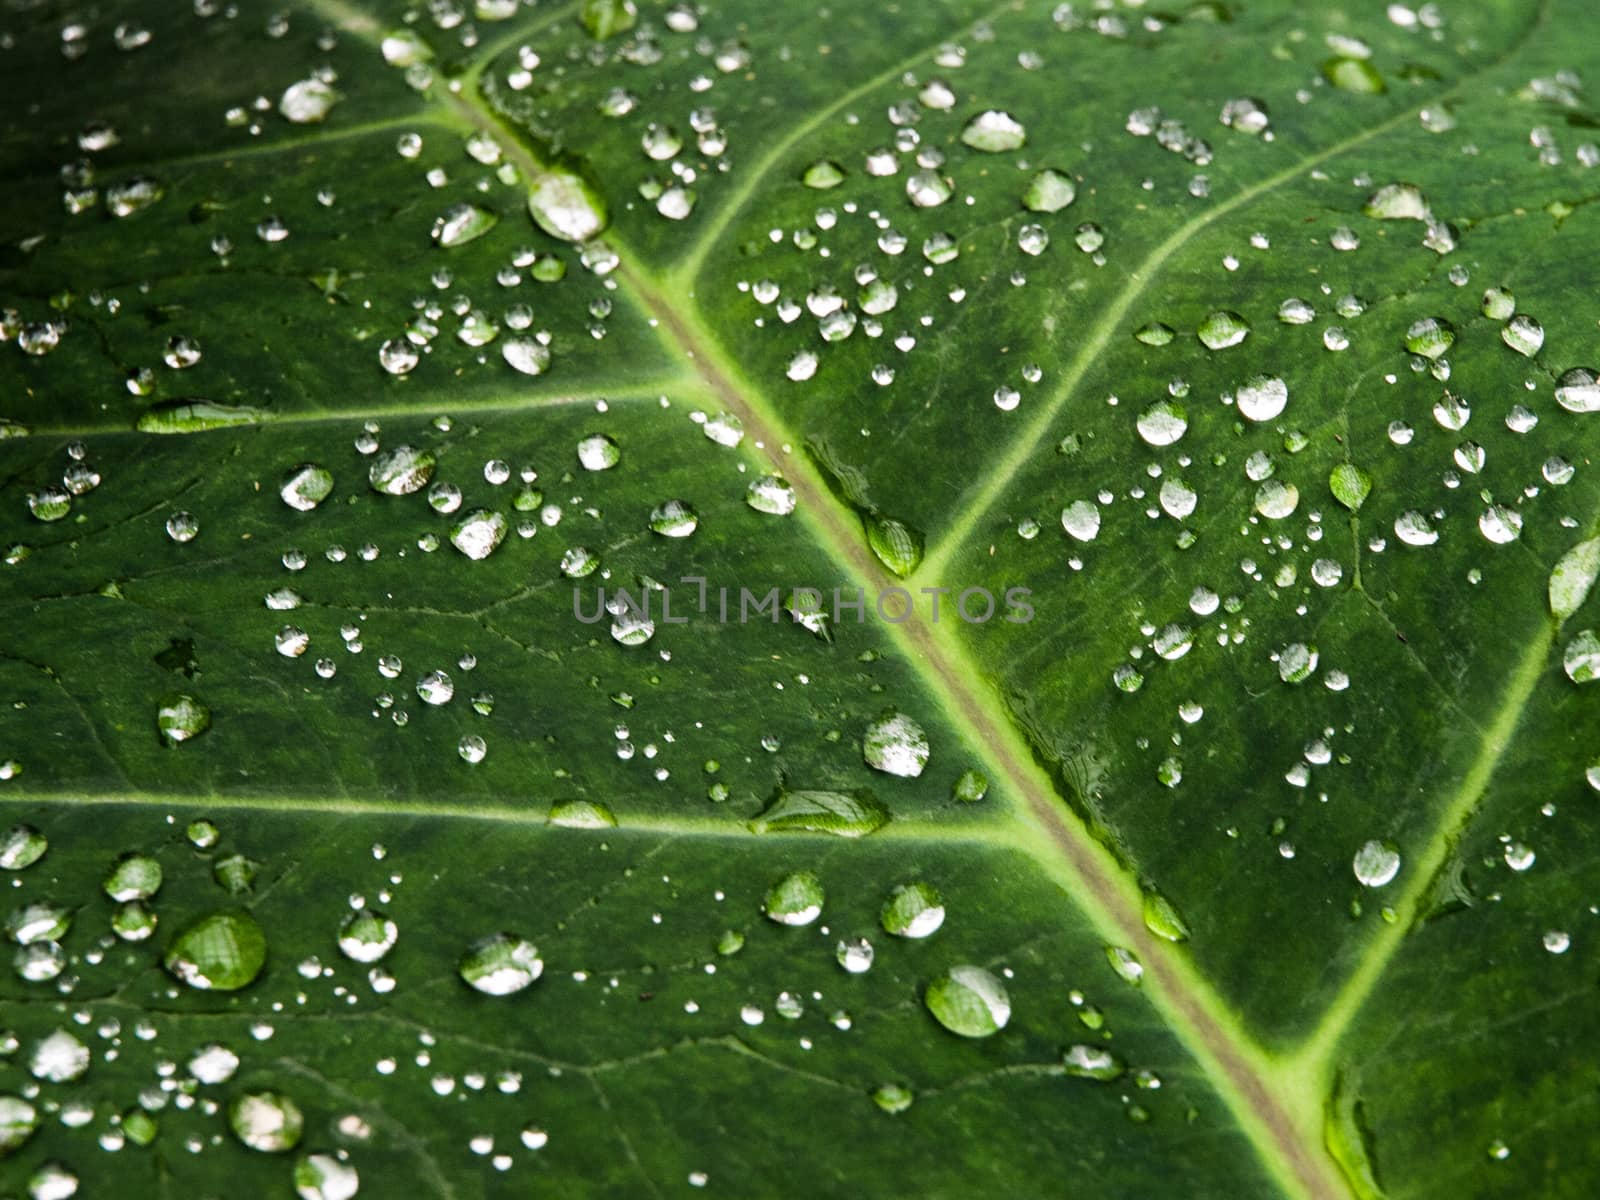 Small rain dropps on green leaf